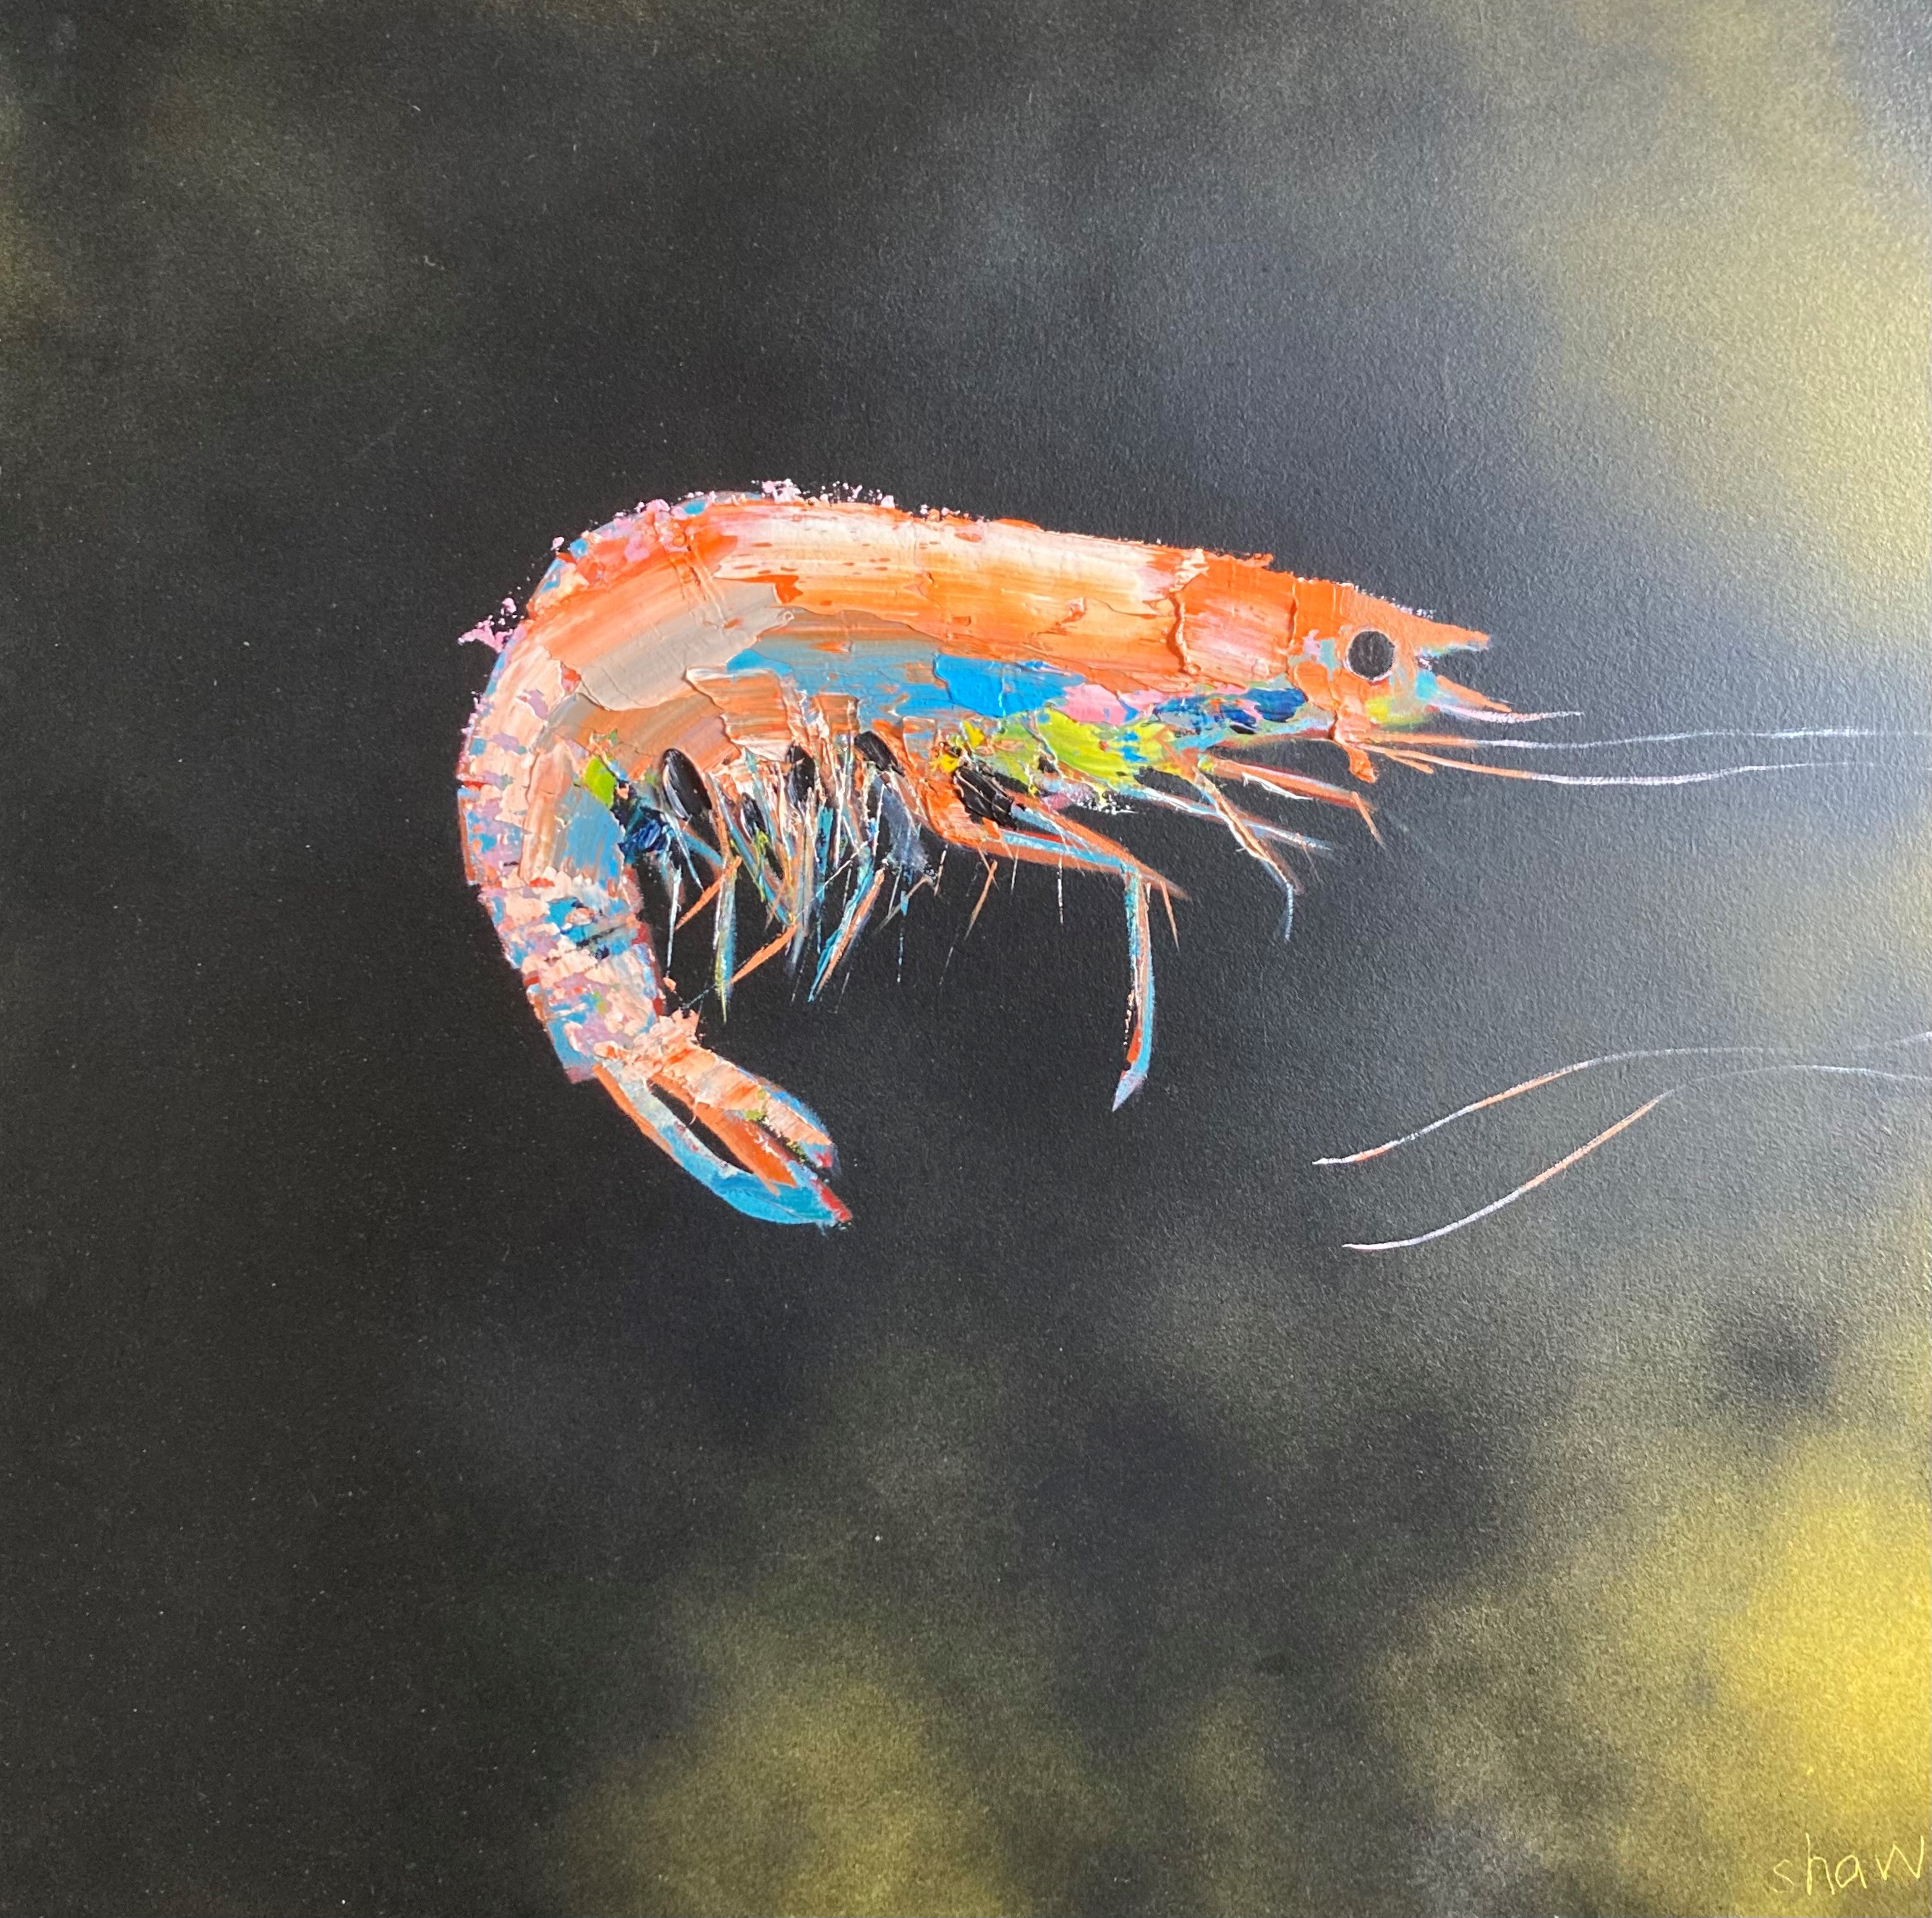 'Shrimp' by artist Rob Shaw